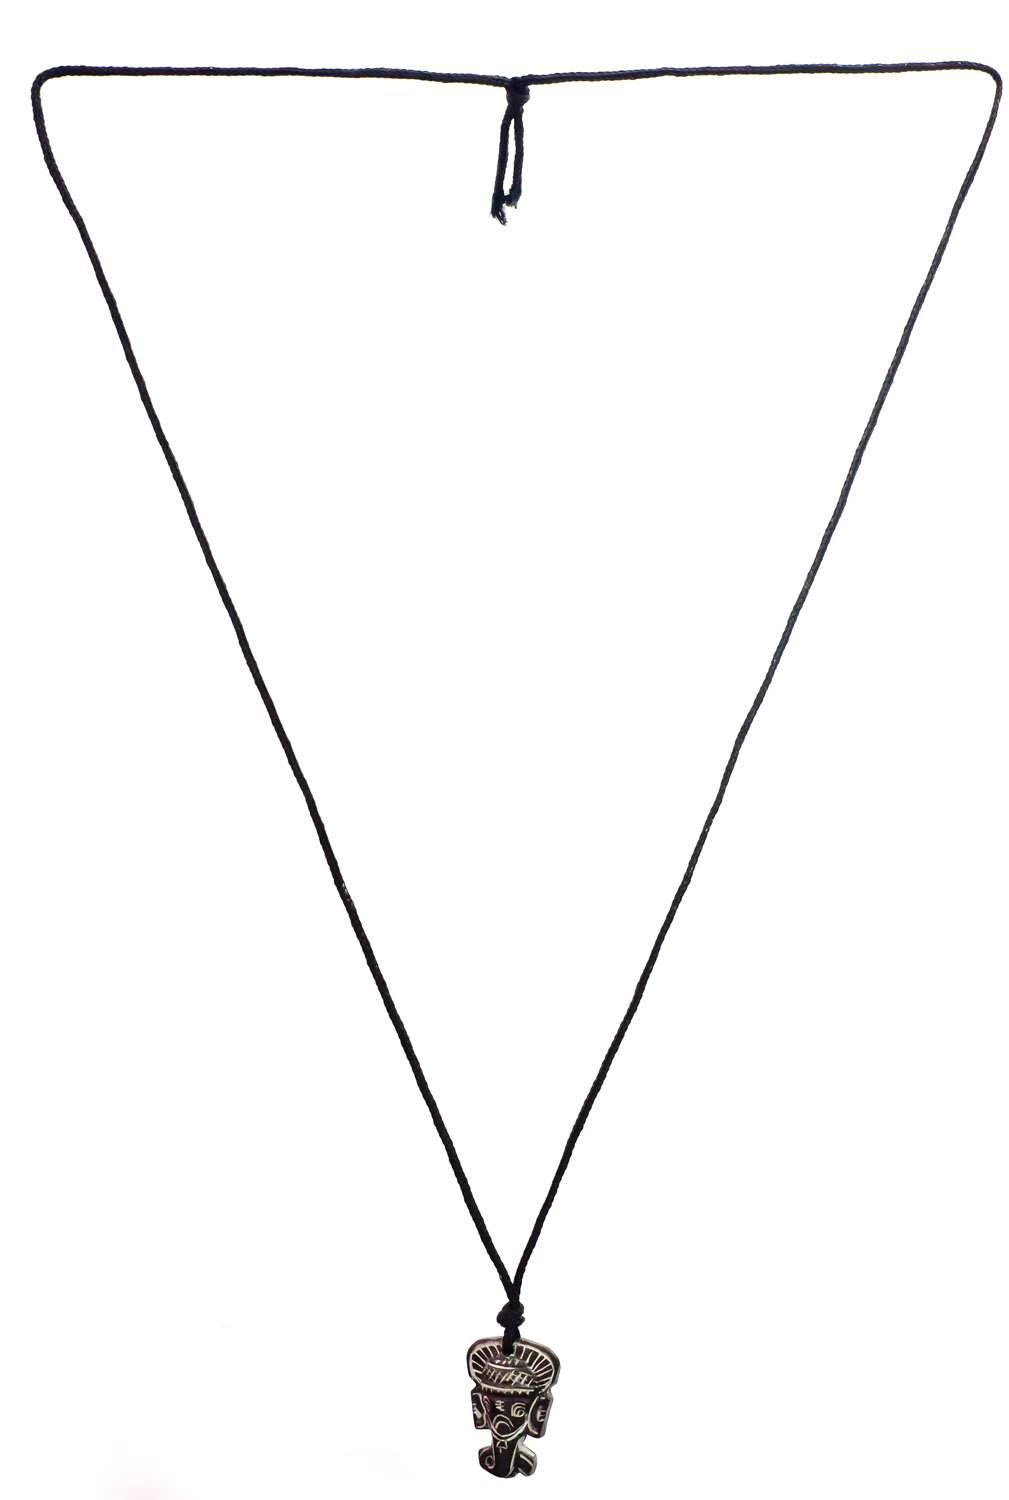 Angel Wing Heart Mini - Pendant - Rope Necklace - Black w/White Stones